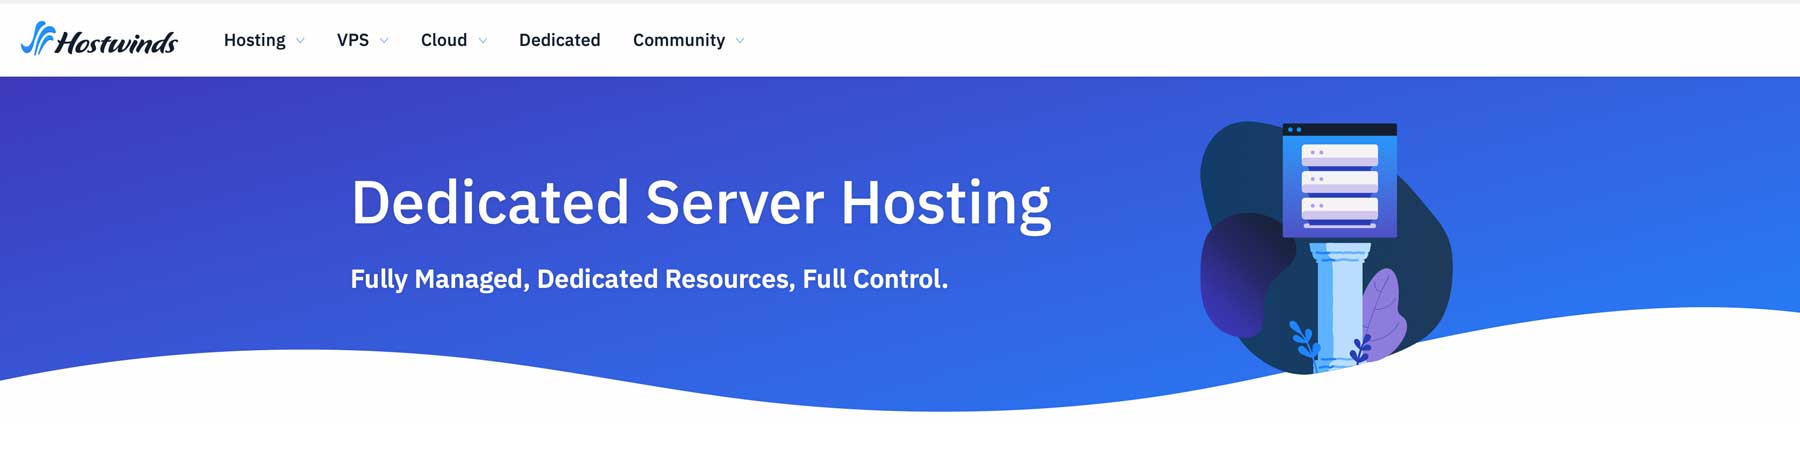 Hostwinds dedicated server hosting